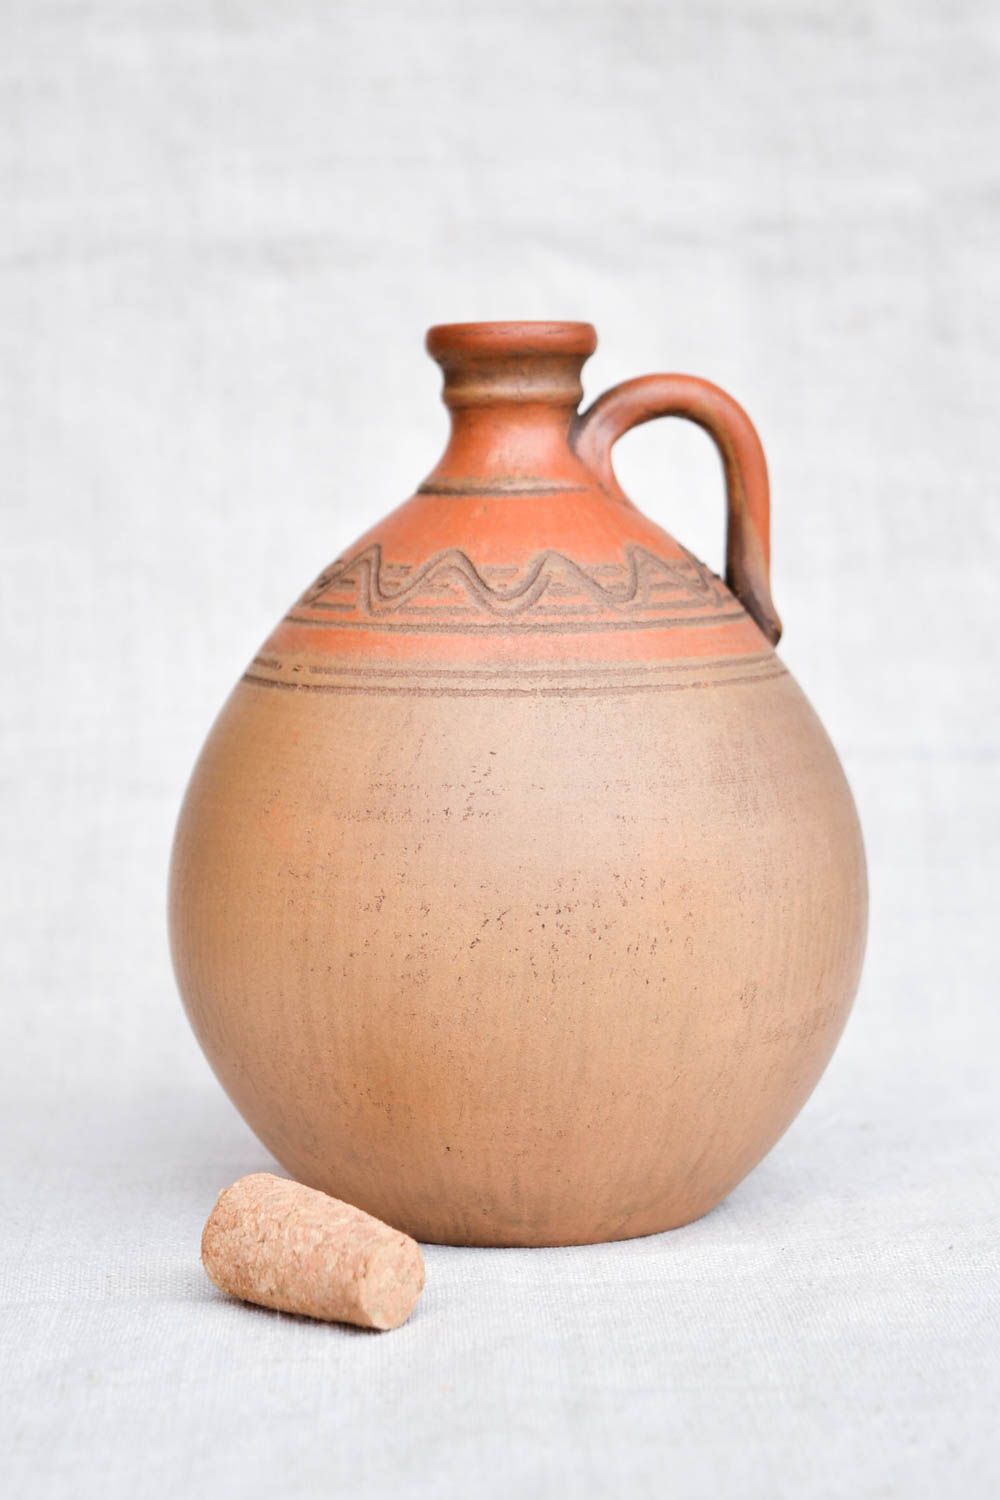 60 oz ceramic handmade terracotta wine carafe in ball shape with handle 1 lb photo 3